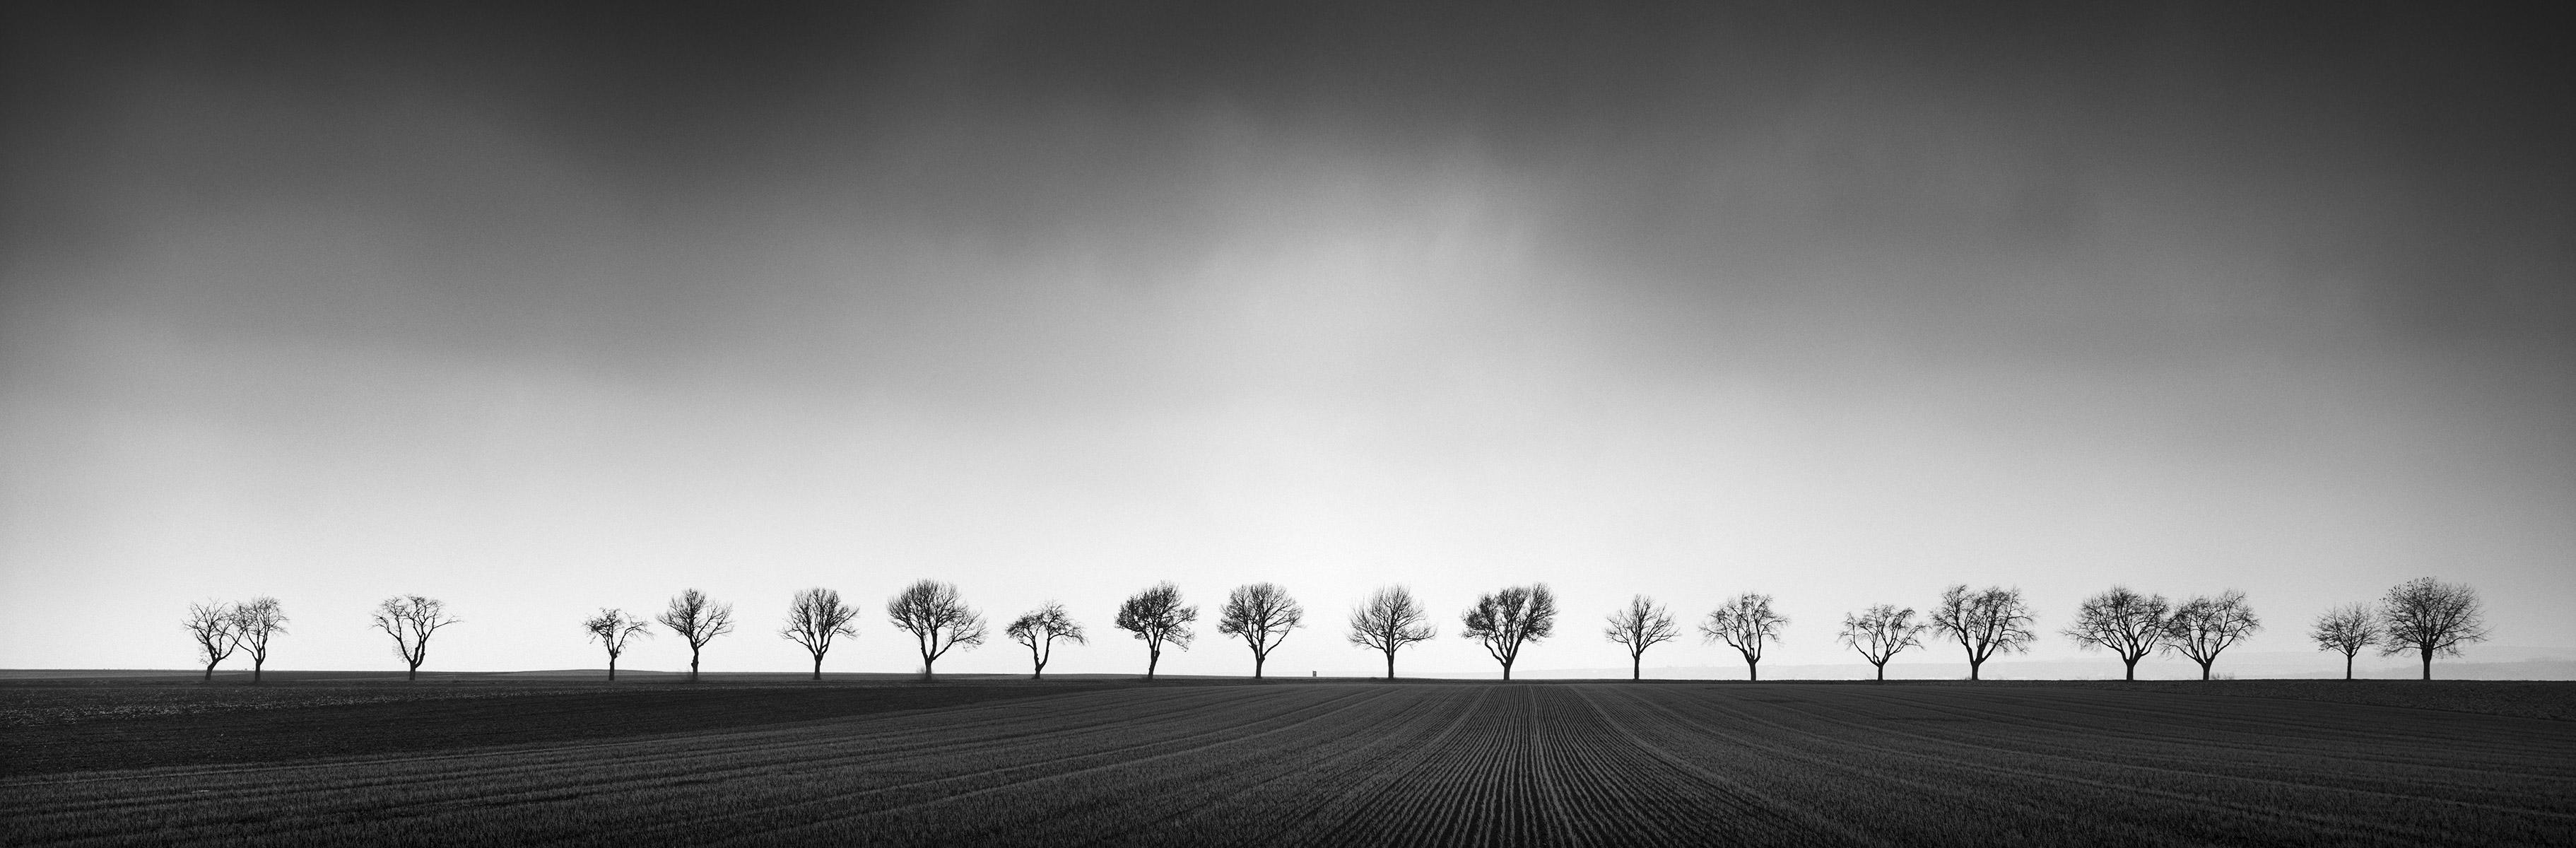 Gerald Berghammer Landscape Photograph - Twenty Cherry Trees, Avenue, Austria, black and white art photography landscapes